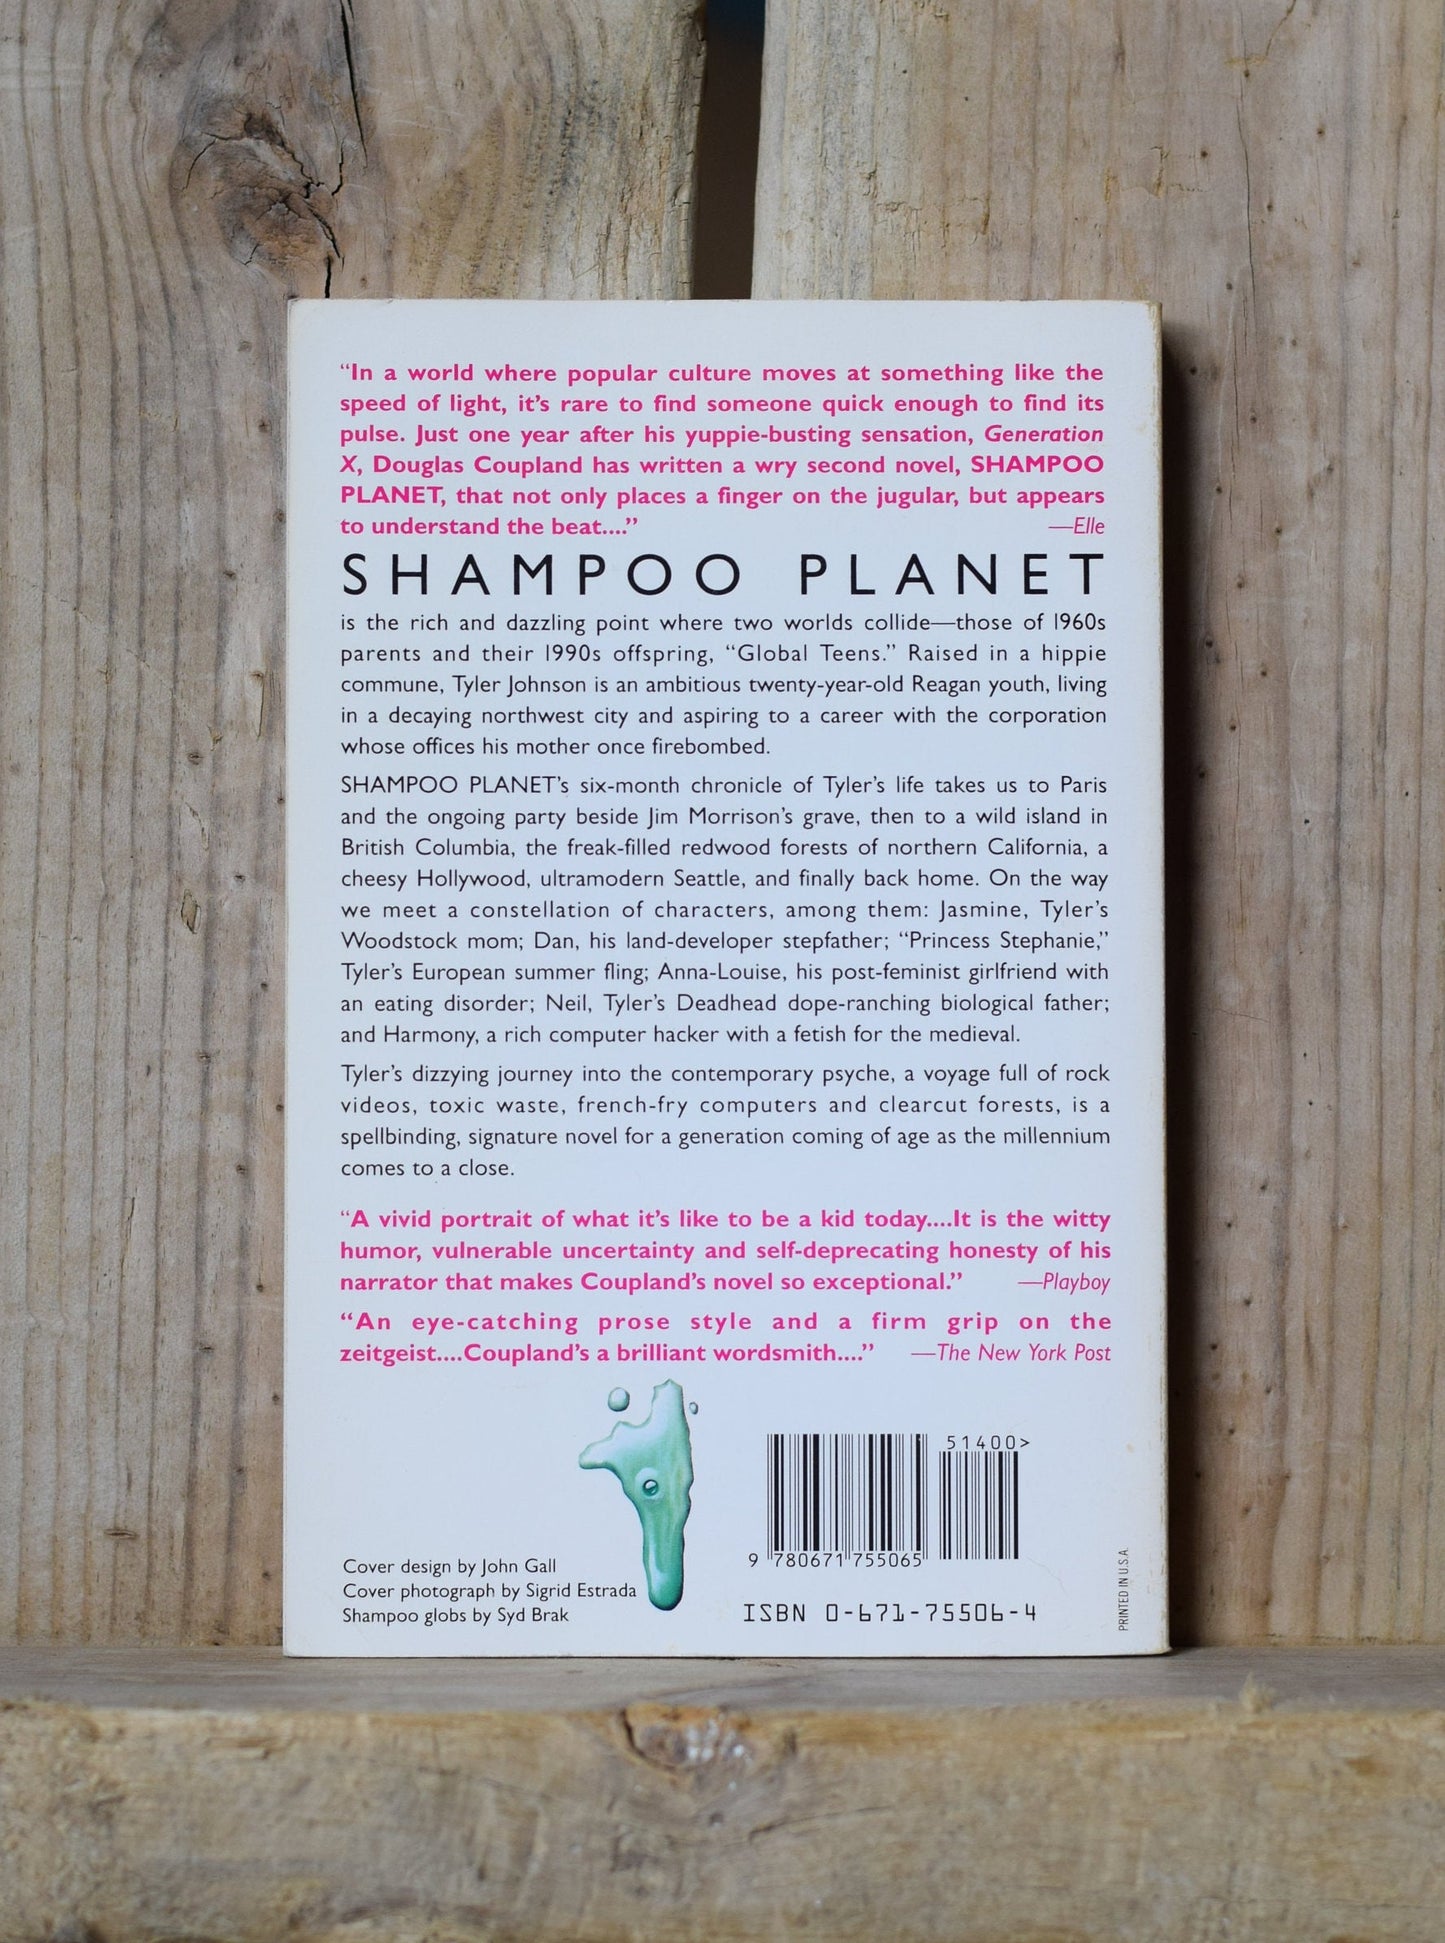 Vintage Fiction Paperback Novel: Douglas Coupland - Shampoo Planet